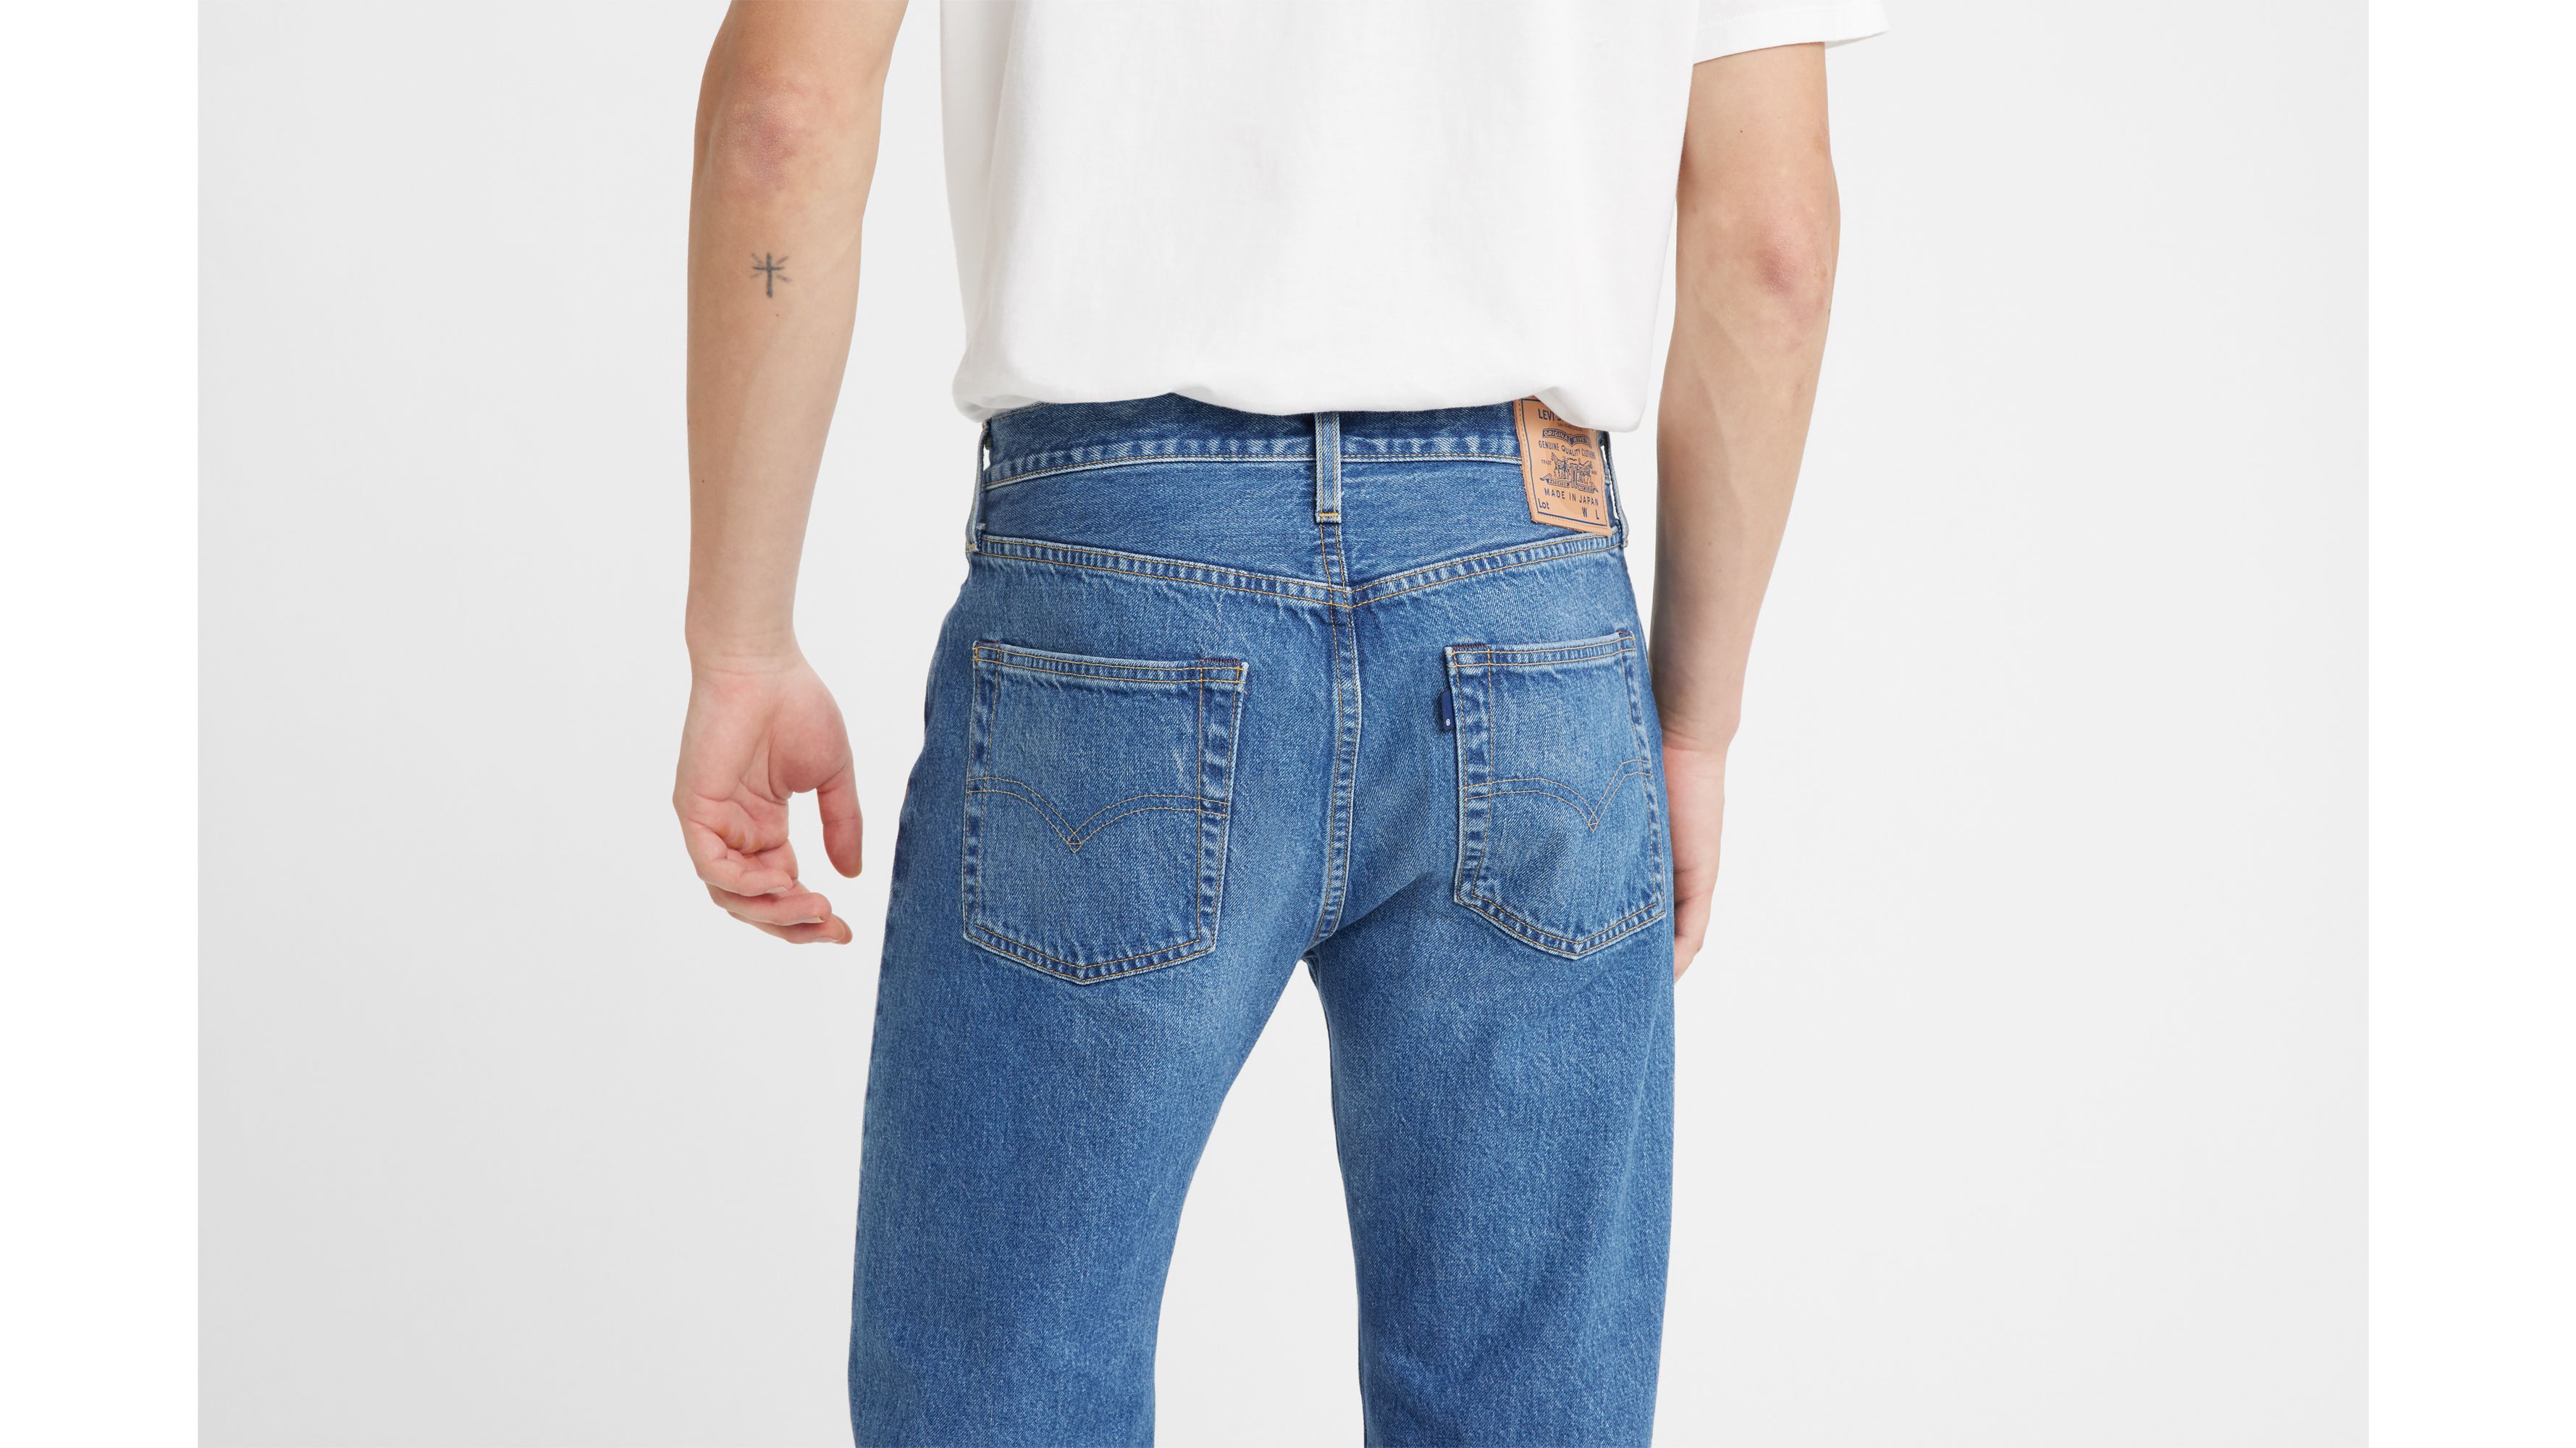 Made In Japan 1980's 501® Original Fit Men's Jeans - Medium Wash